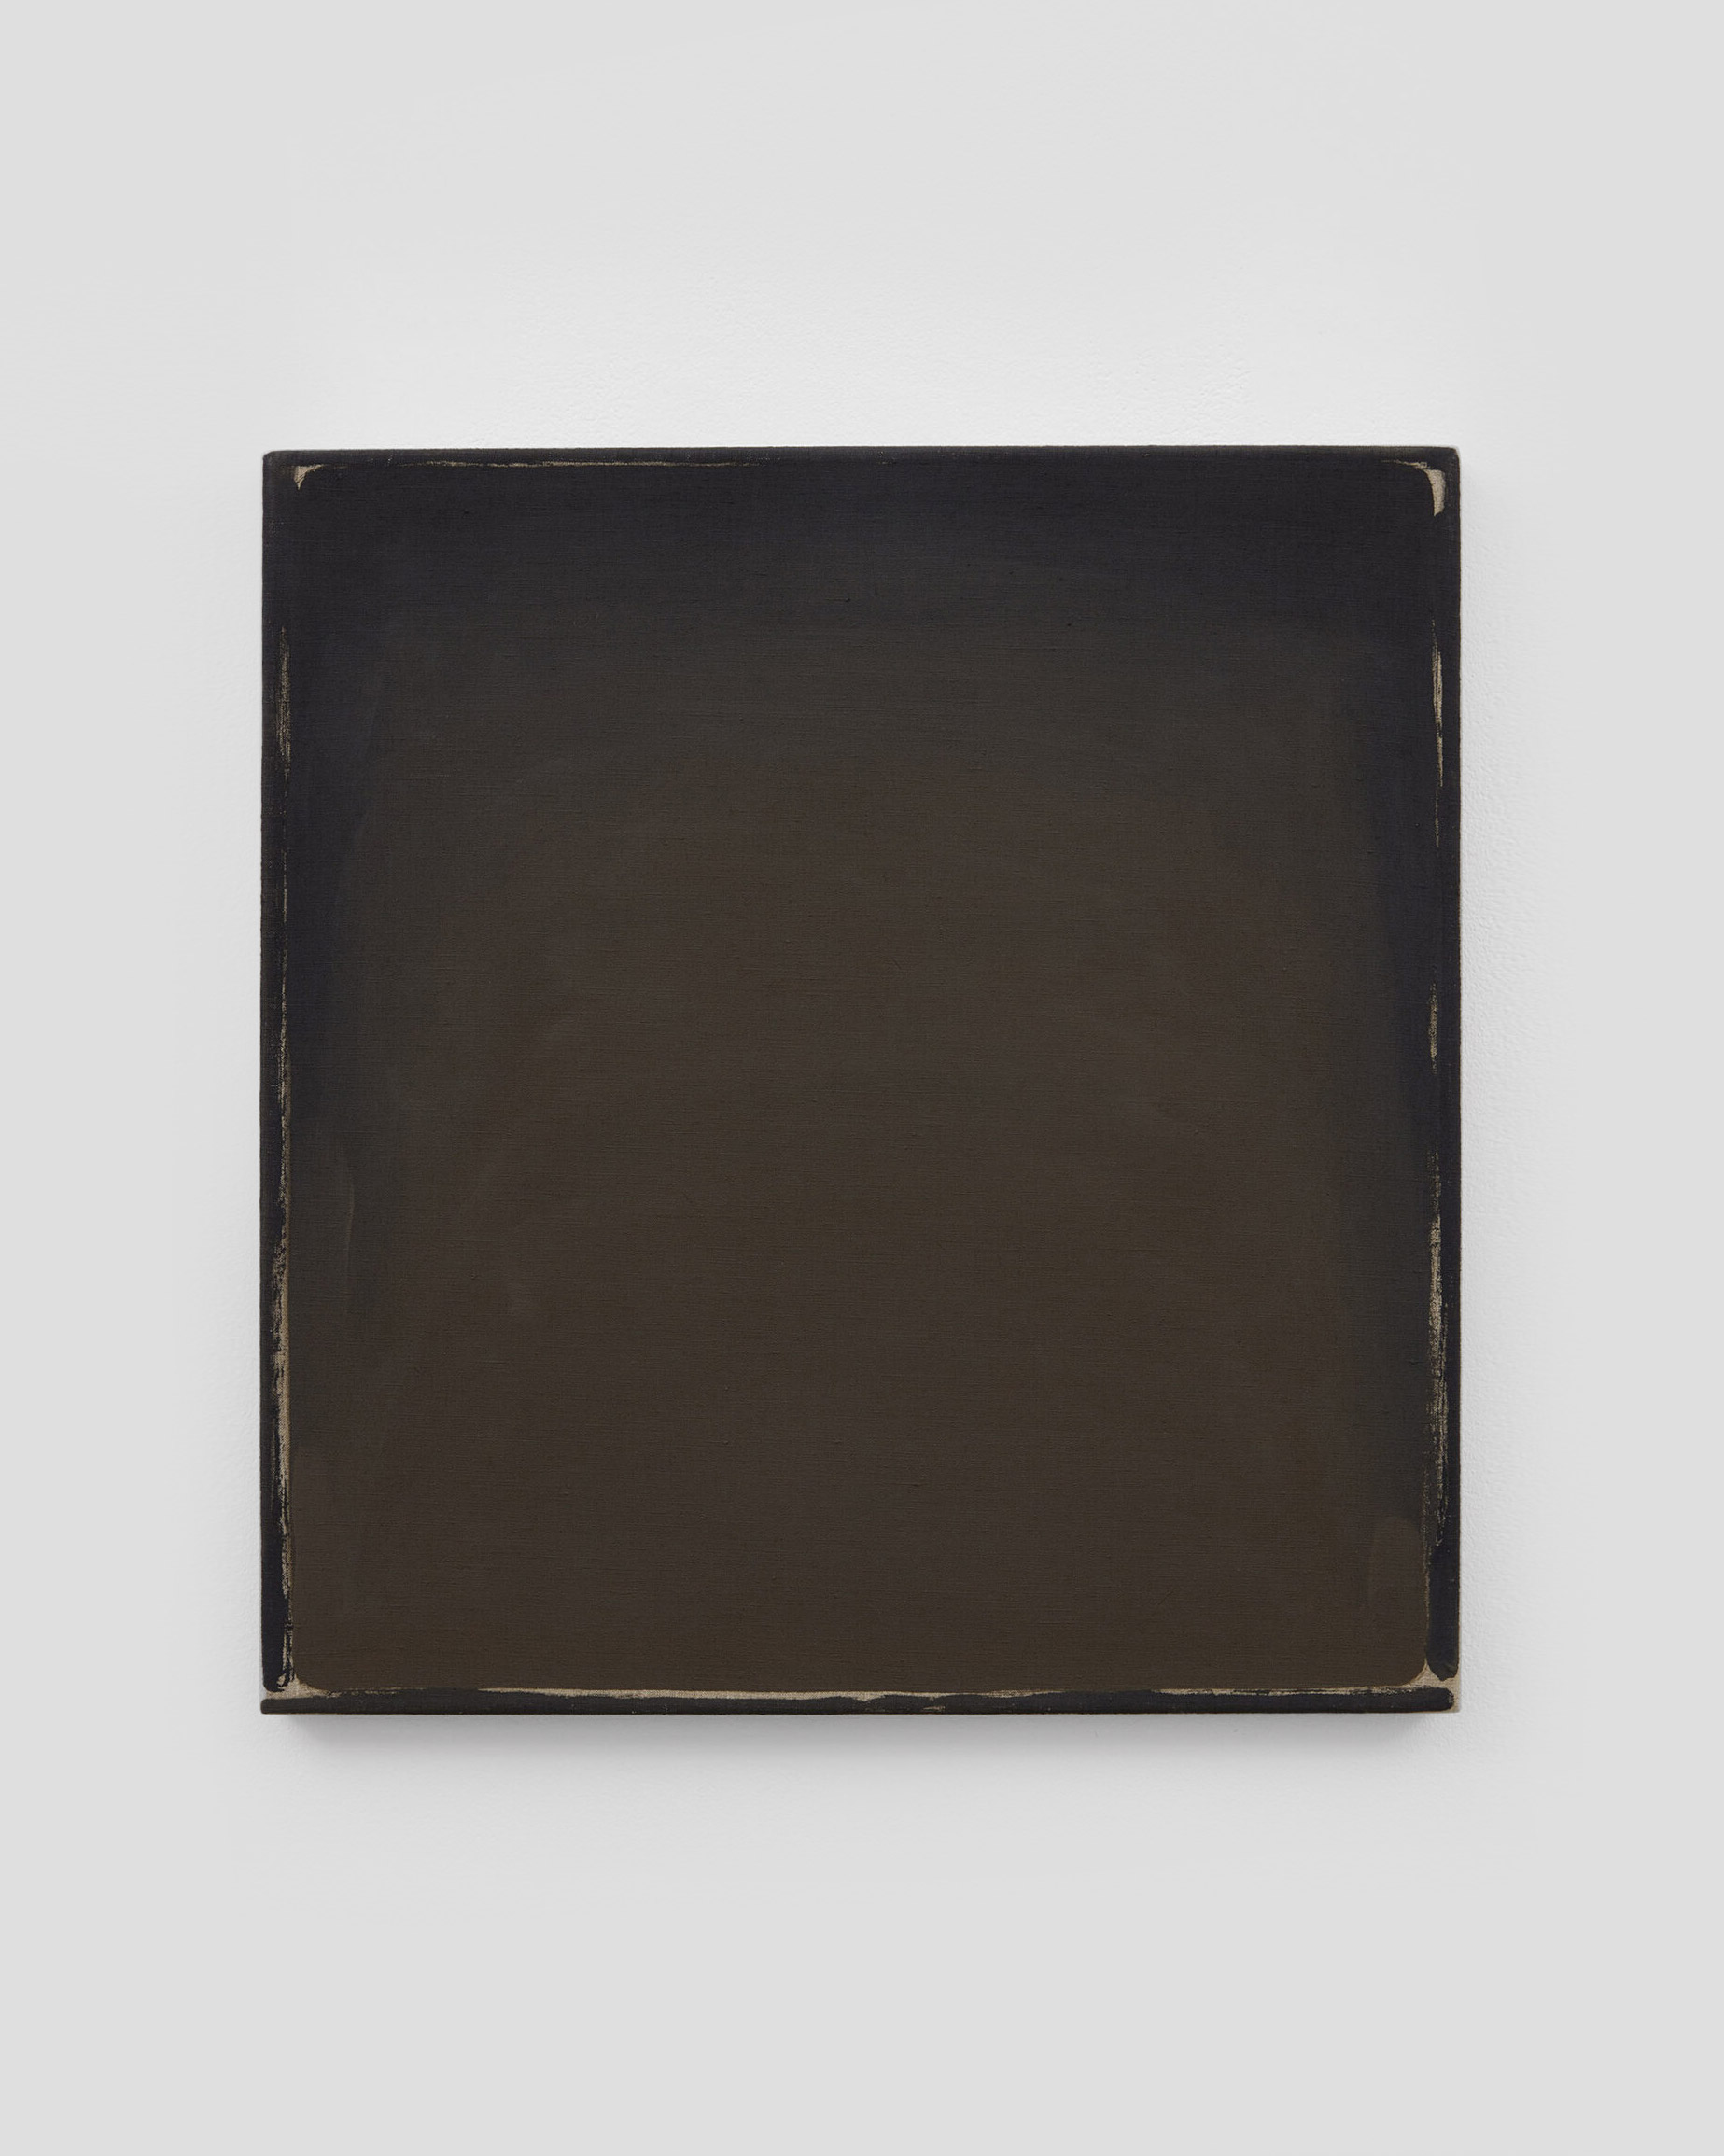 William McKeown, Untitled (Study), 2009-2011, Oil on linen, 45.5 × 43 cm © The Artist, Image Courtesy Casey Kaplan Gallery New York